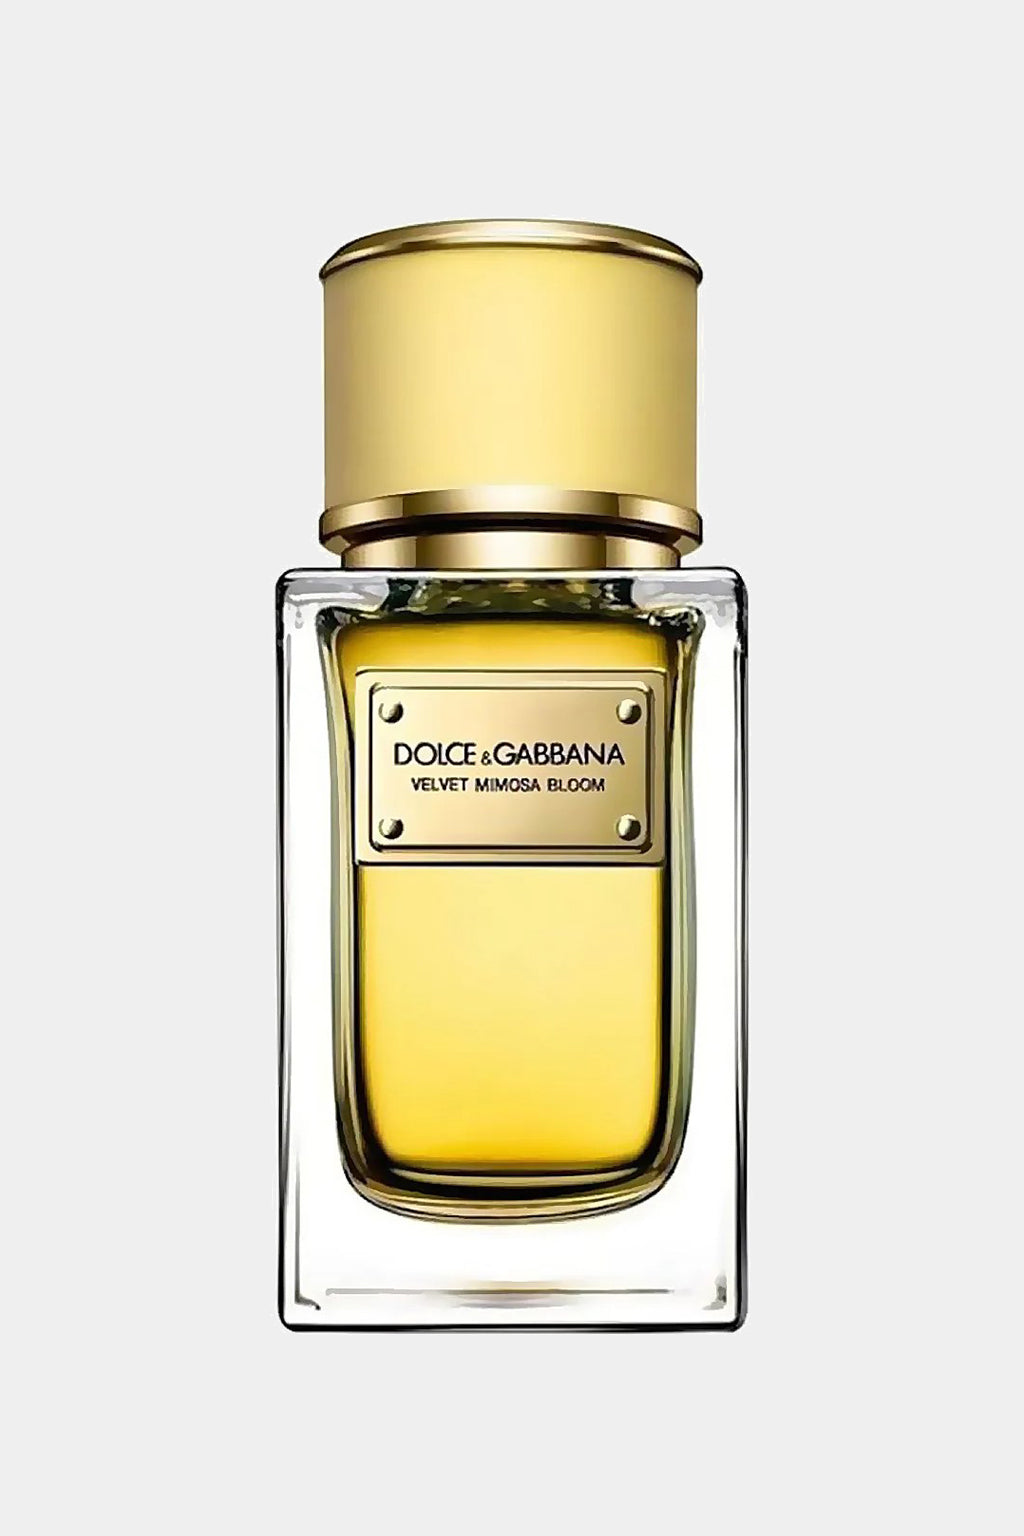 Dolce & Gabbana -  Velvet Mimosa Bloom Eau de Parfum